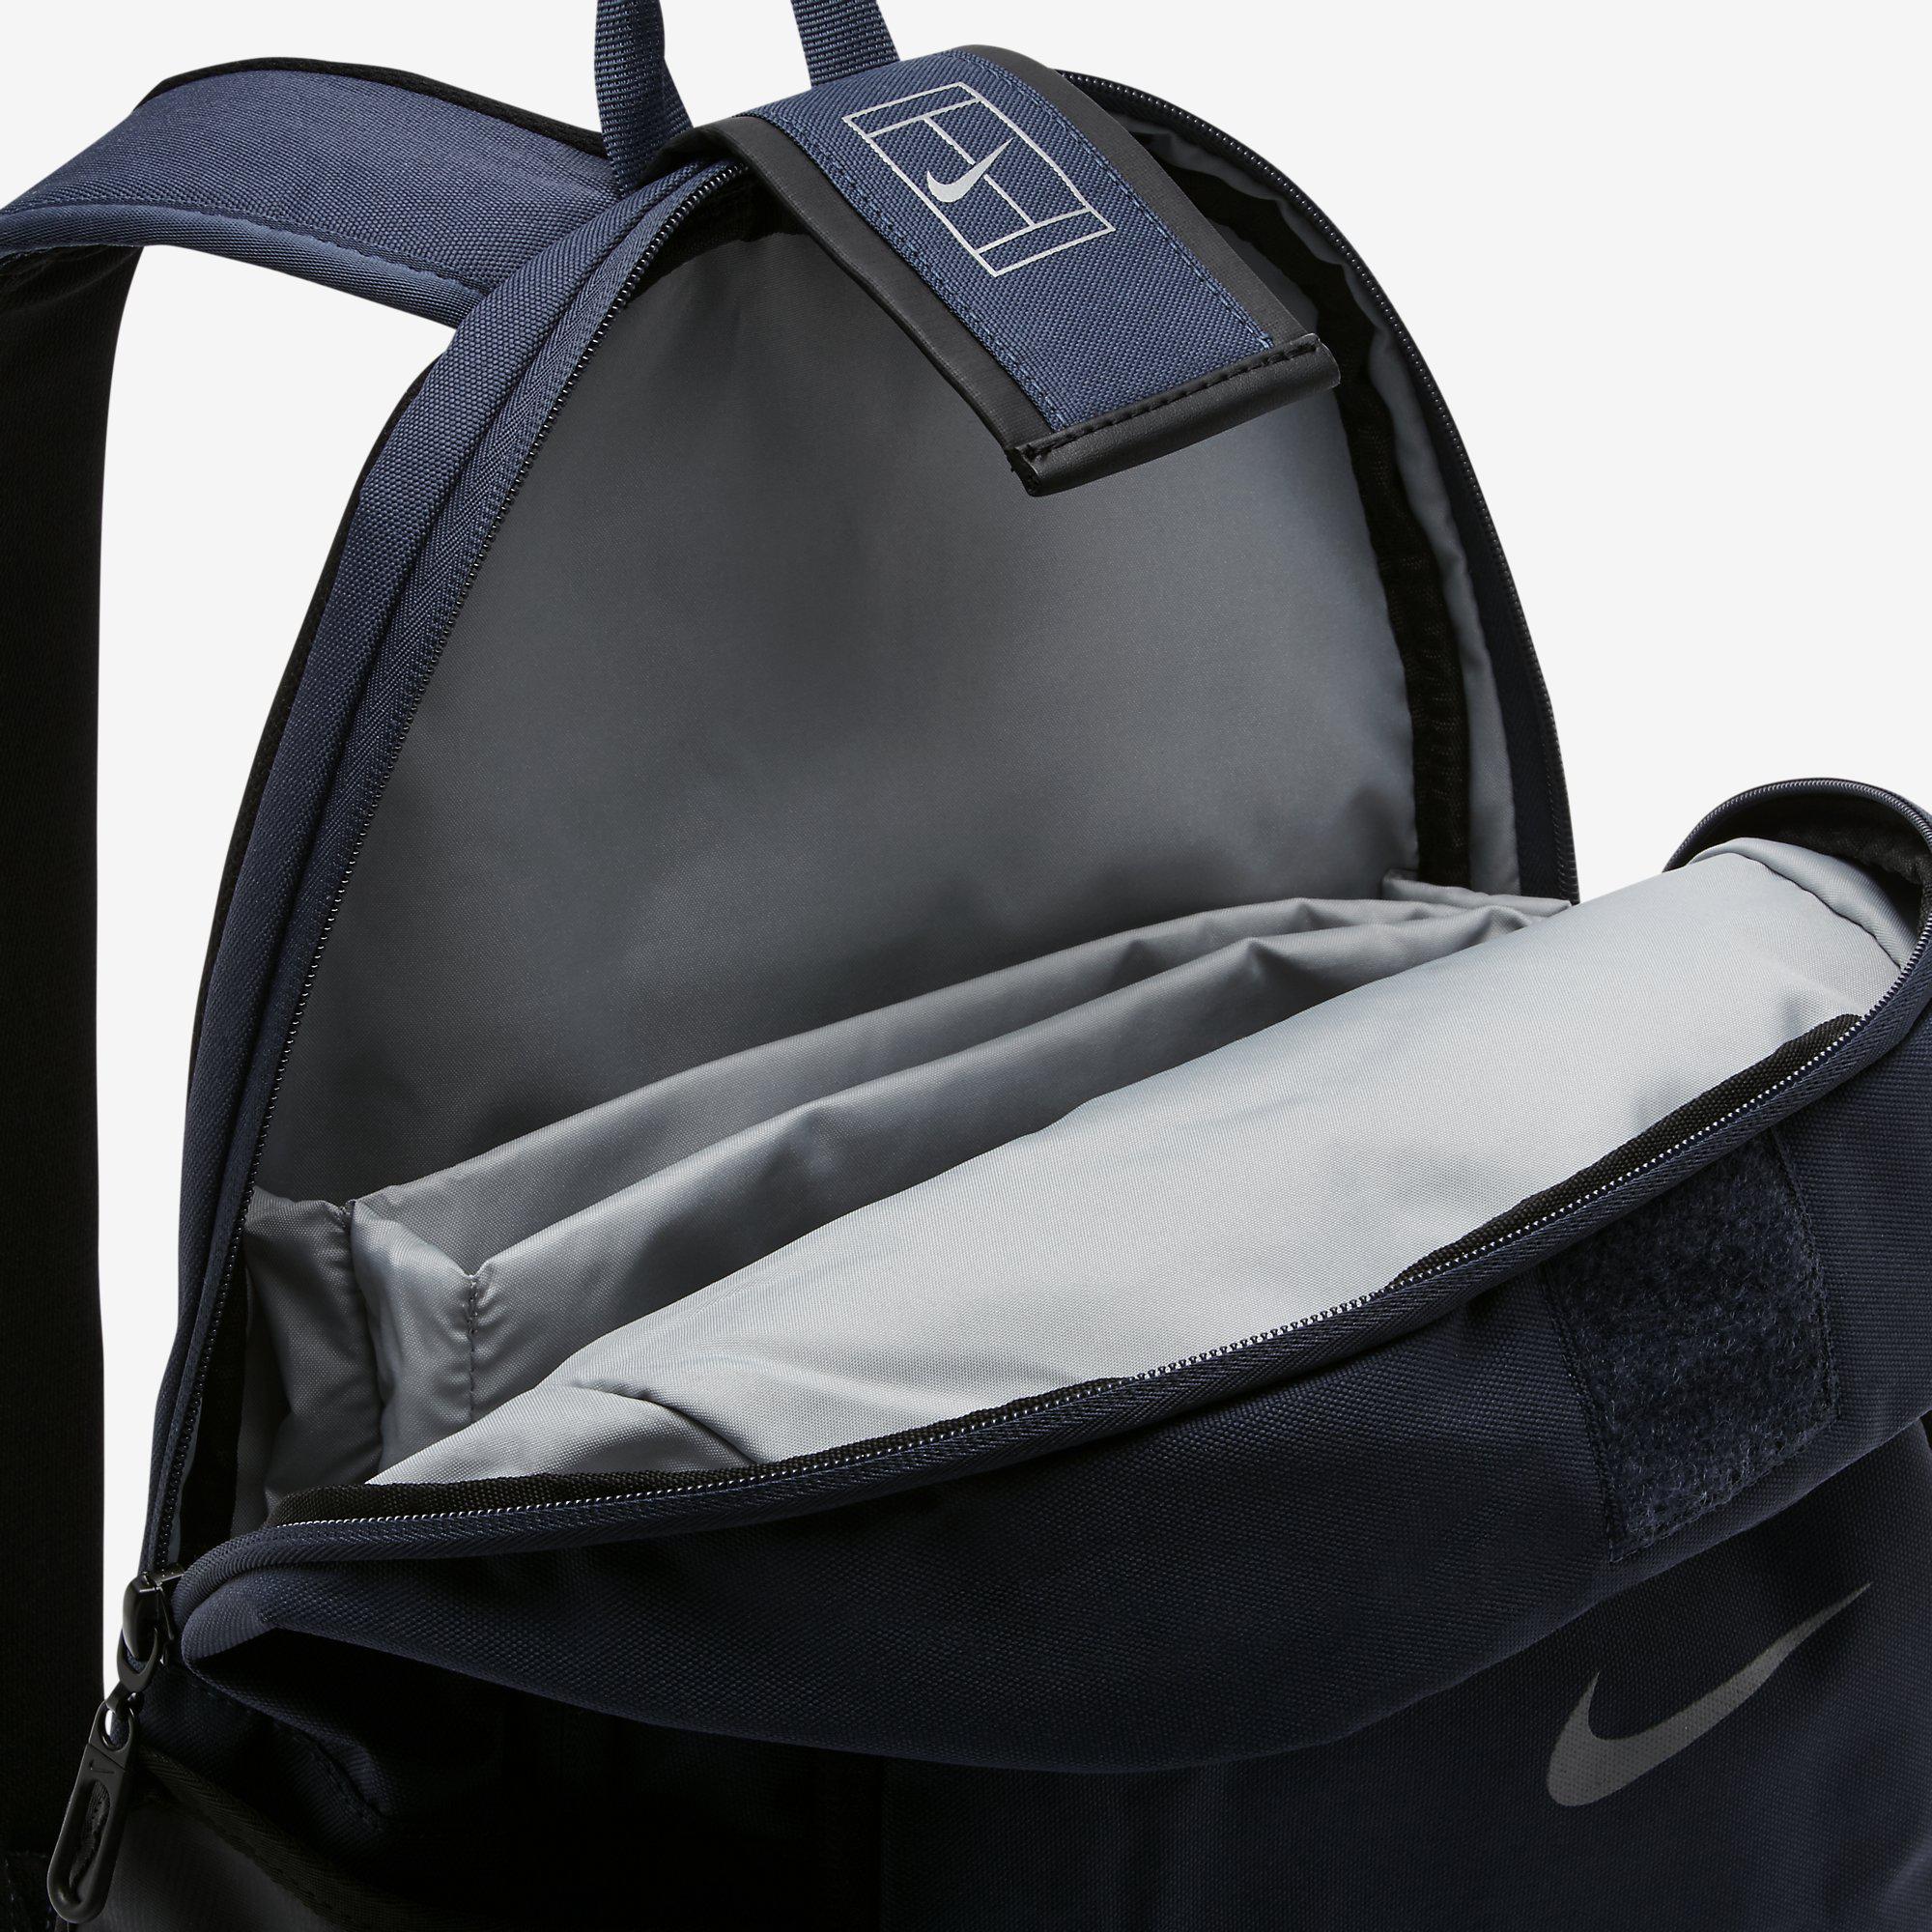 nike tennis backpack 2.0